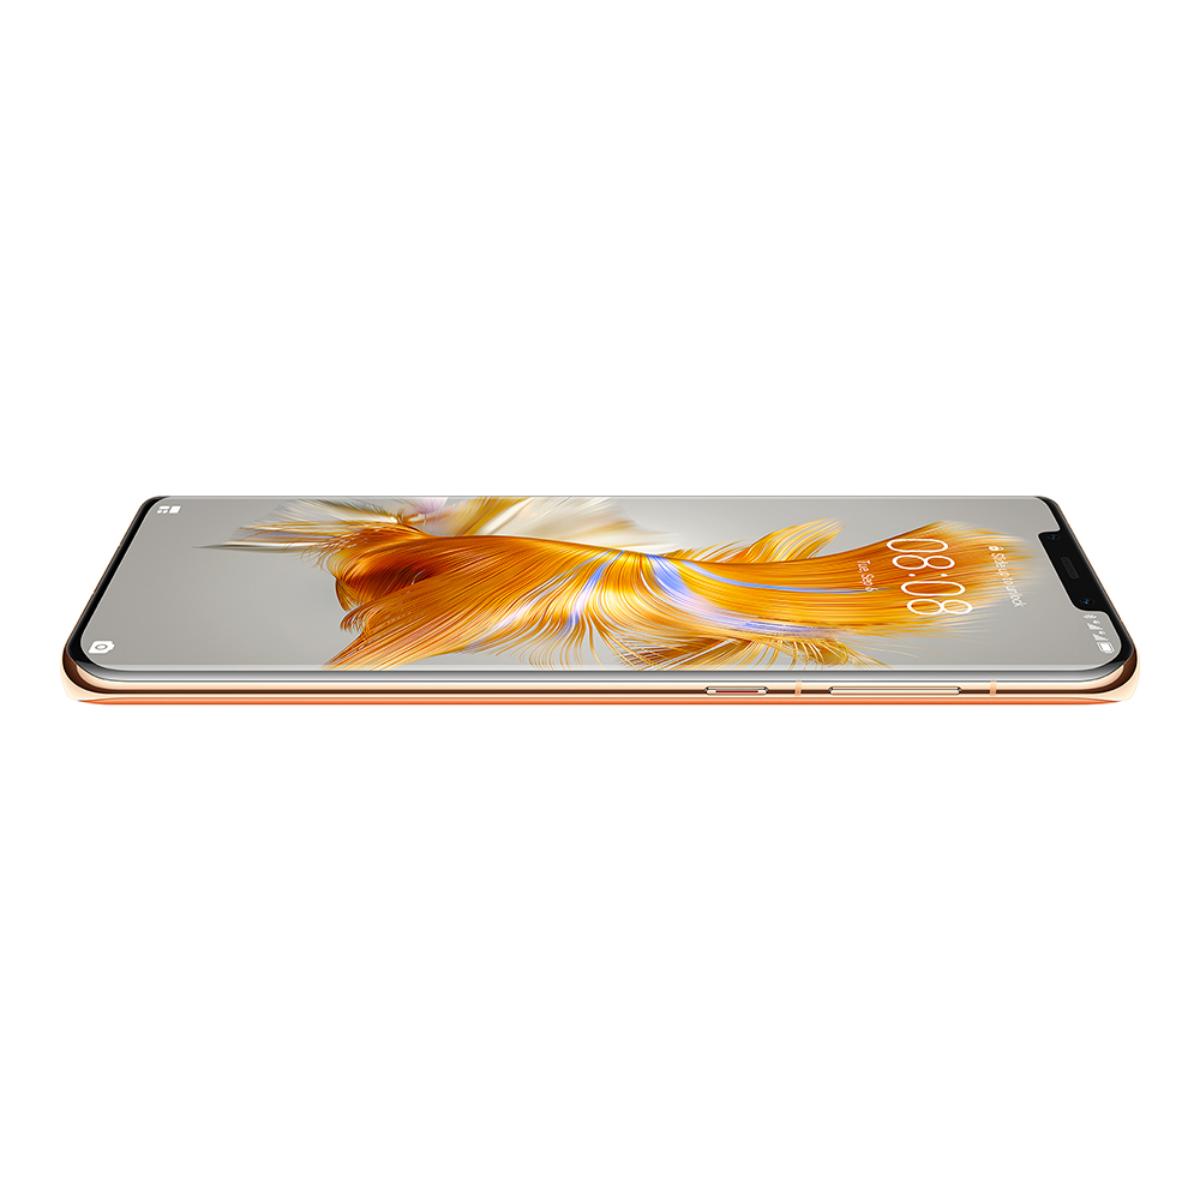 DCO-LX9 / Huawei Mate 50 Pro, 8G, 512GB,+ GT3 SE GREEN (FREE) 6.74 inches / 4G / Orange